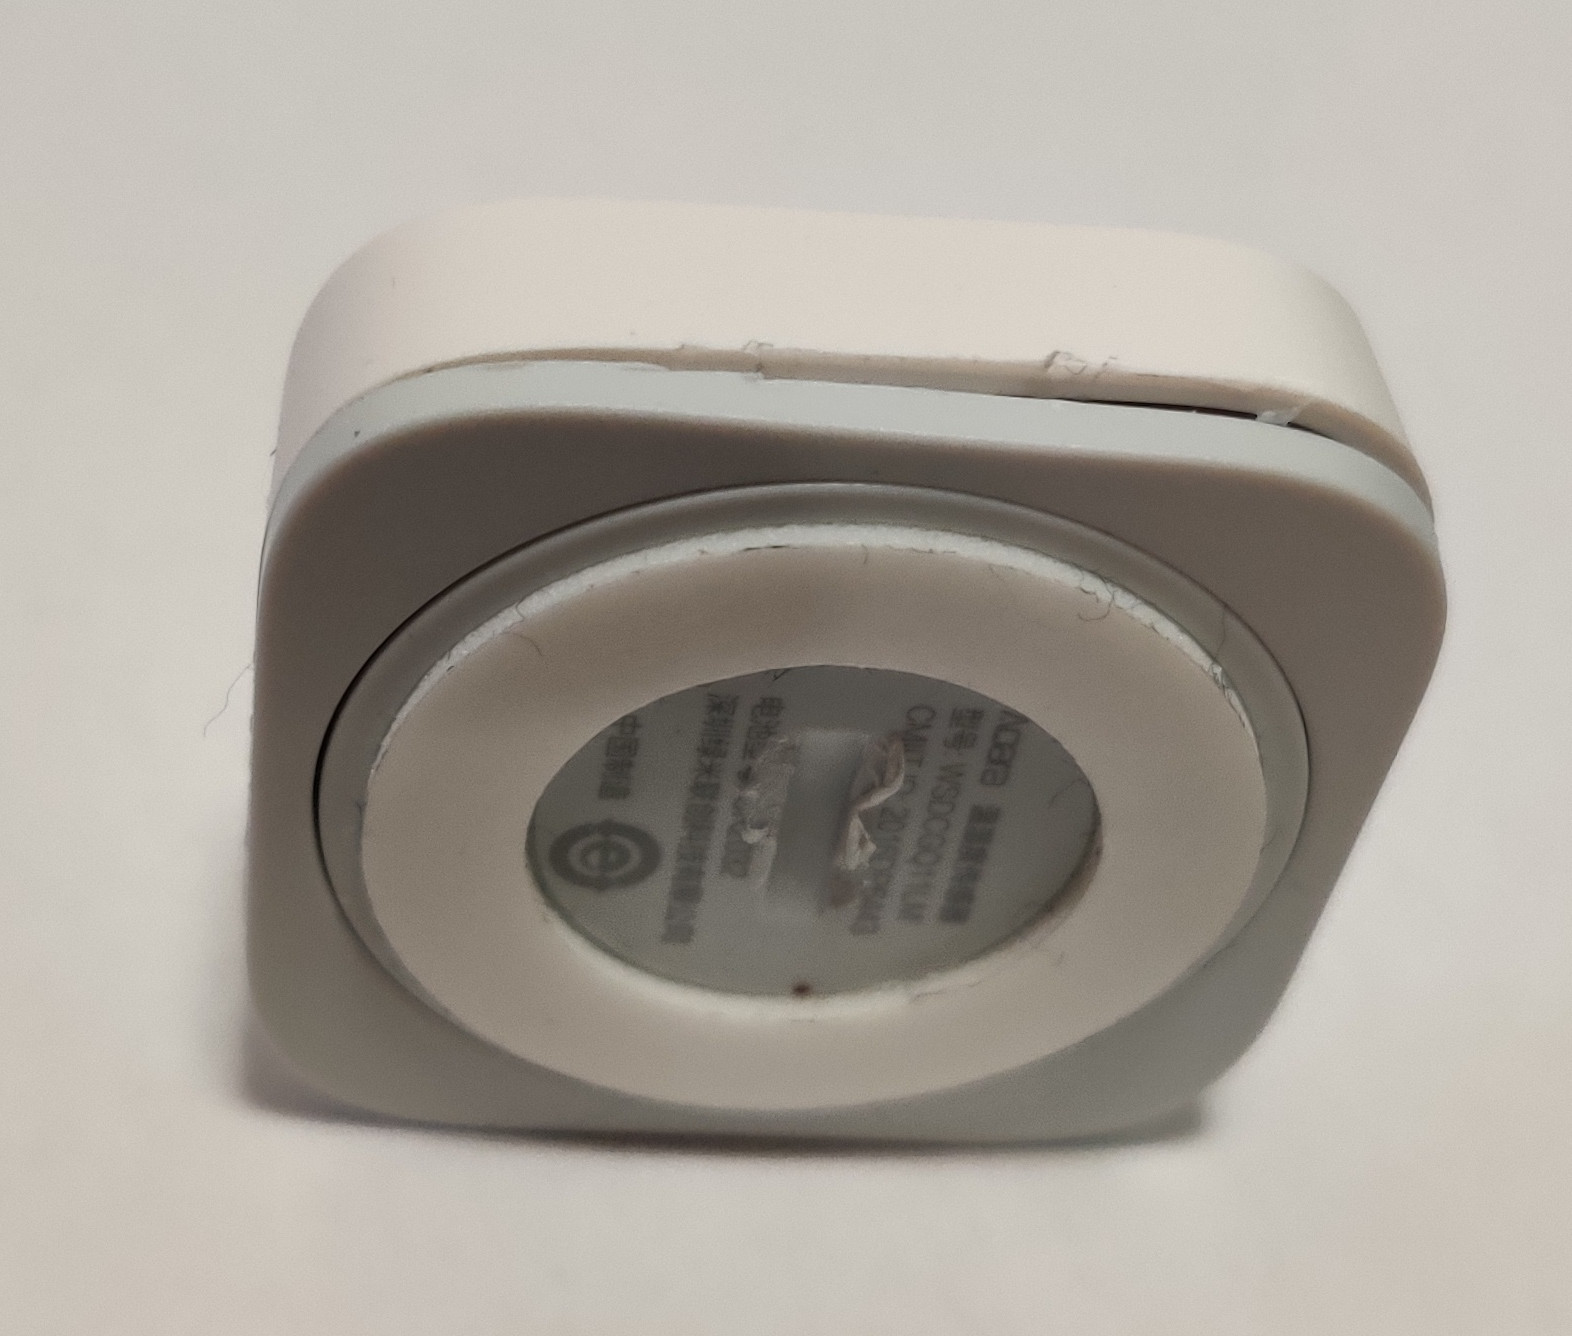 Aqara Zigbee Temperature and Humidity Sensor